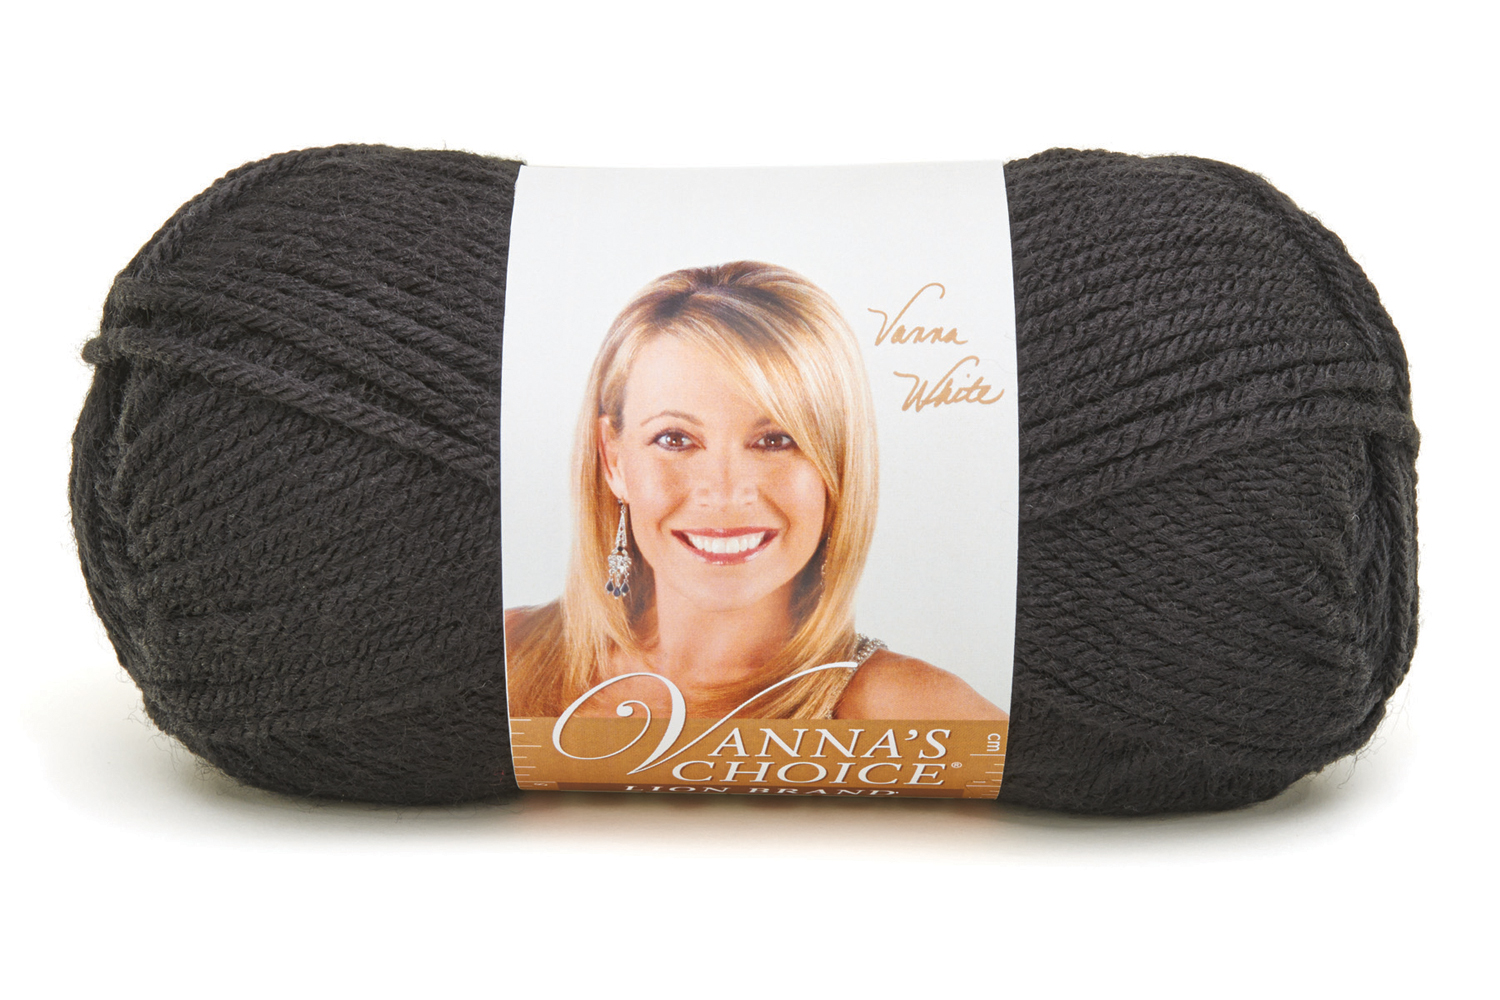 Vanna's Choice yarn in Black